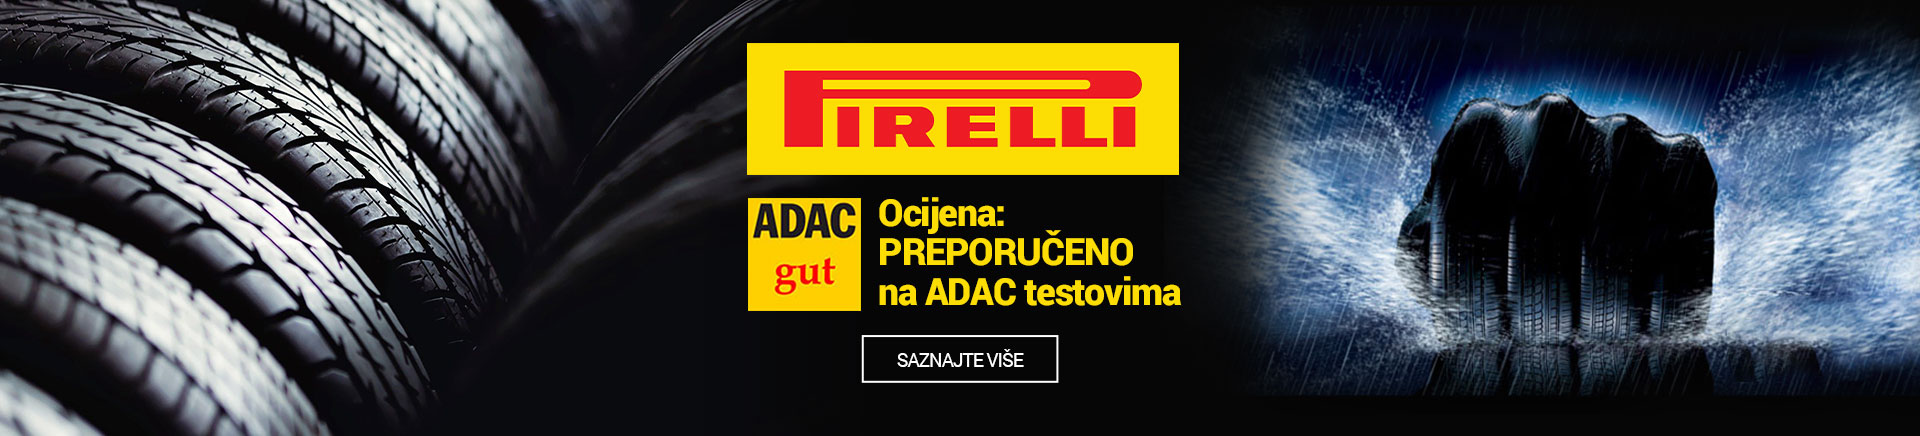 HR Pirelli Gume ADAC 2021 MOBILE 380 X 436.jpg